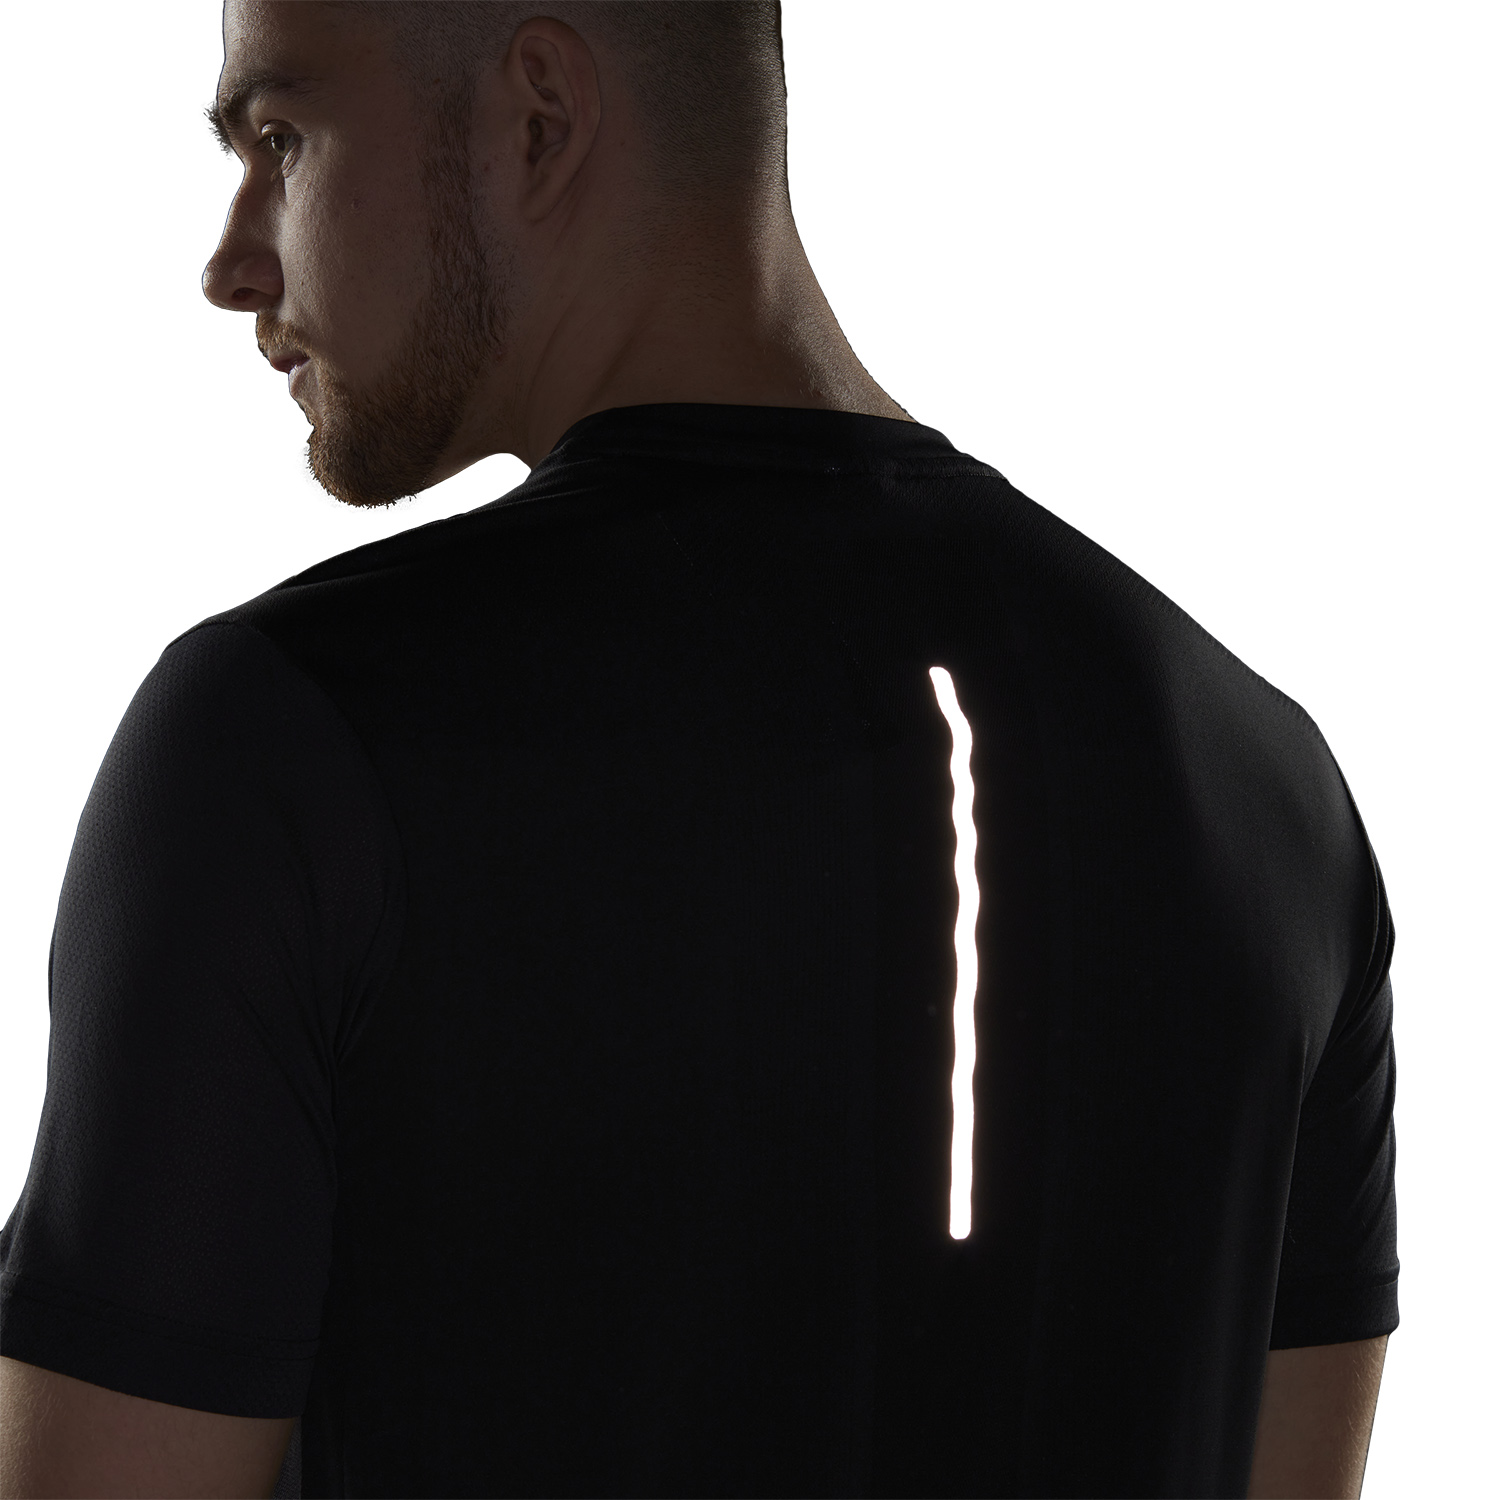 adidas Ultimate Knit T-Shirt - Black